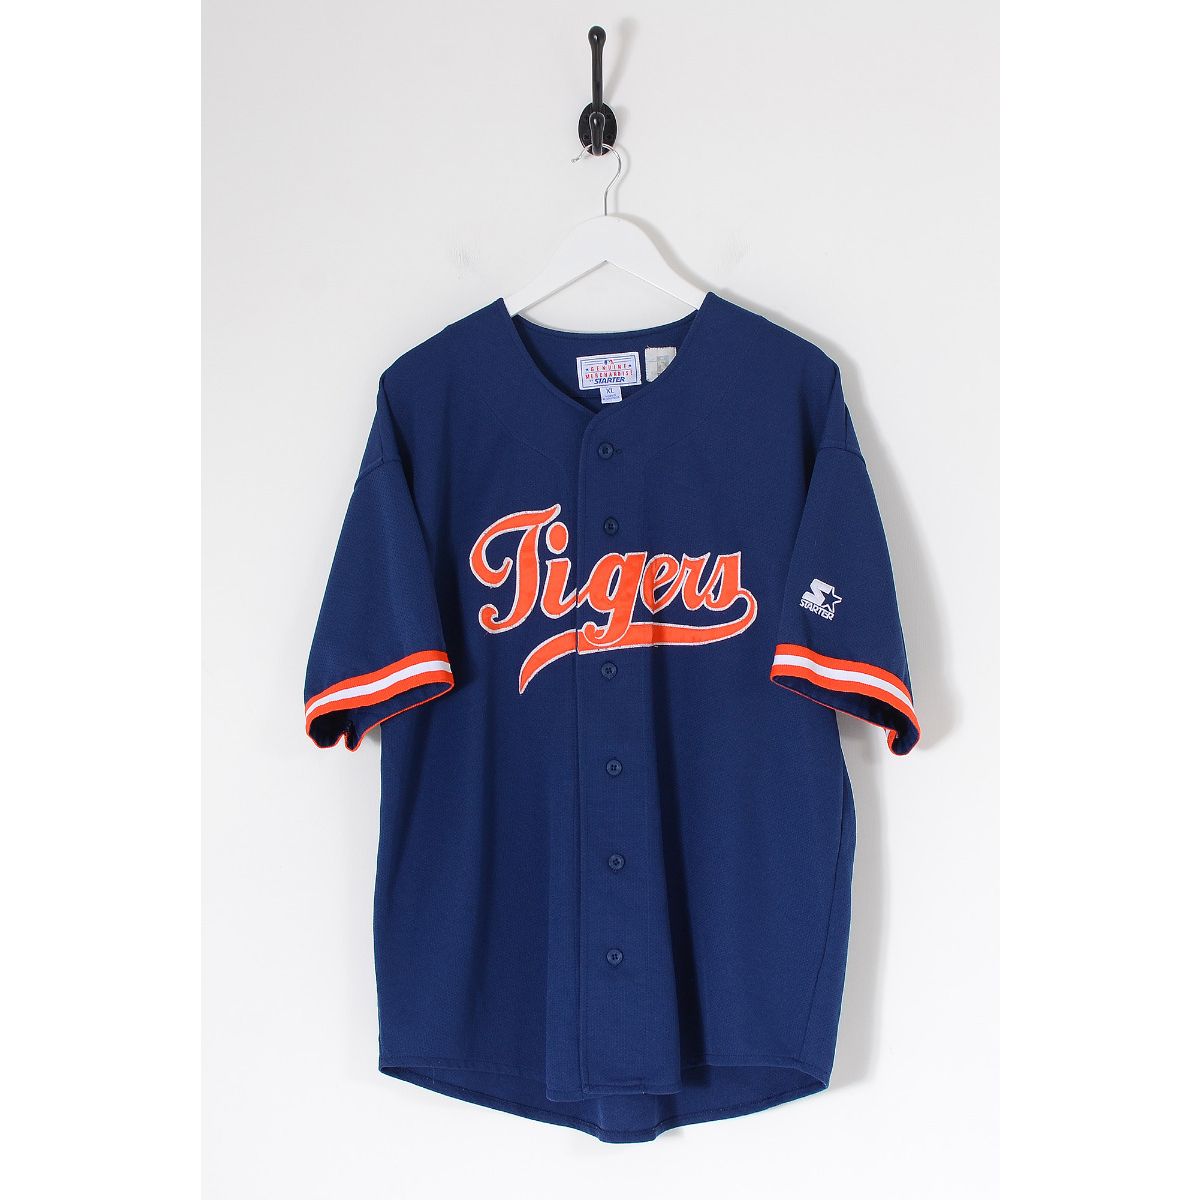 Vintage Detroit Tigers MLB Baseball Jersey Navy Blue XL